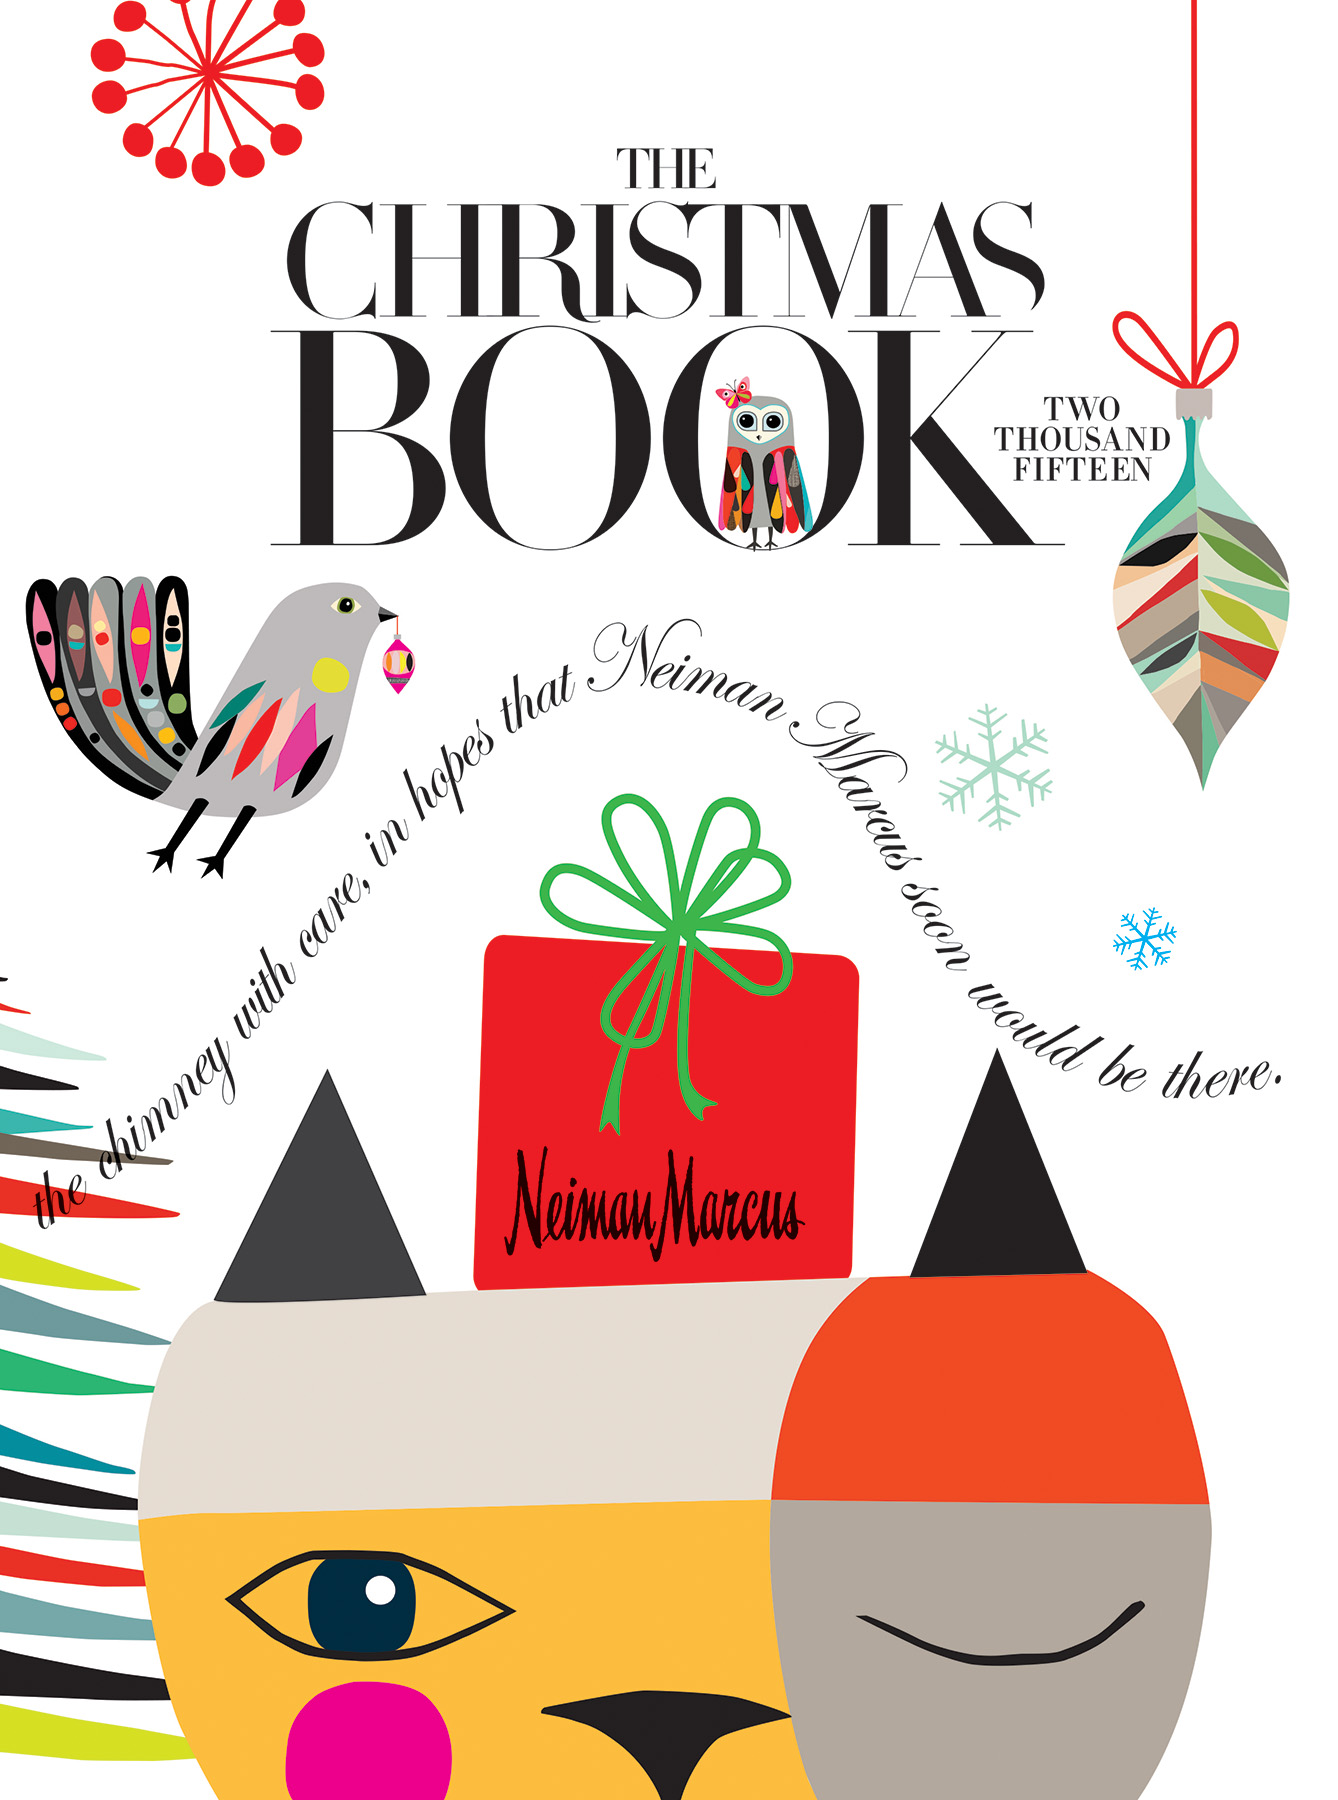 2015 Neiman Marcus Christmas Book cover